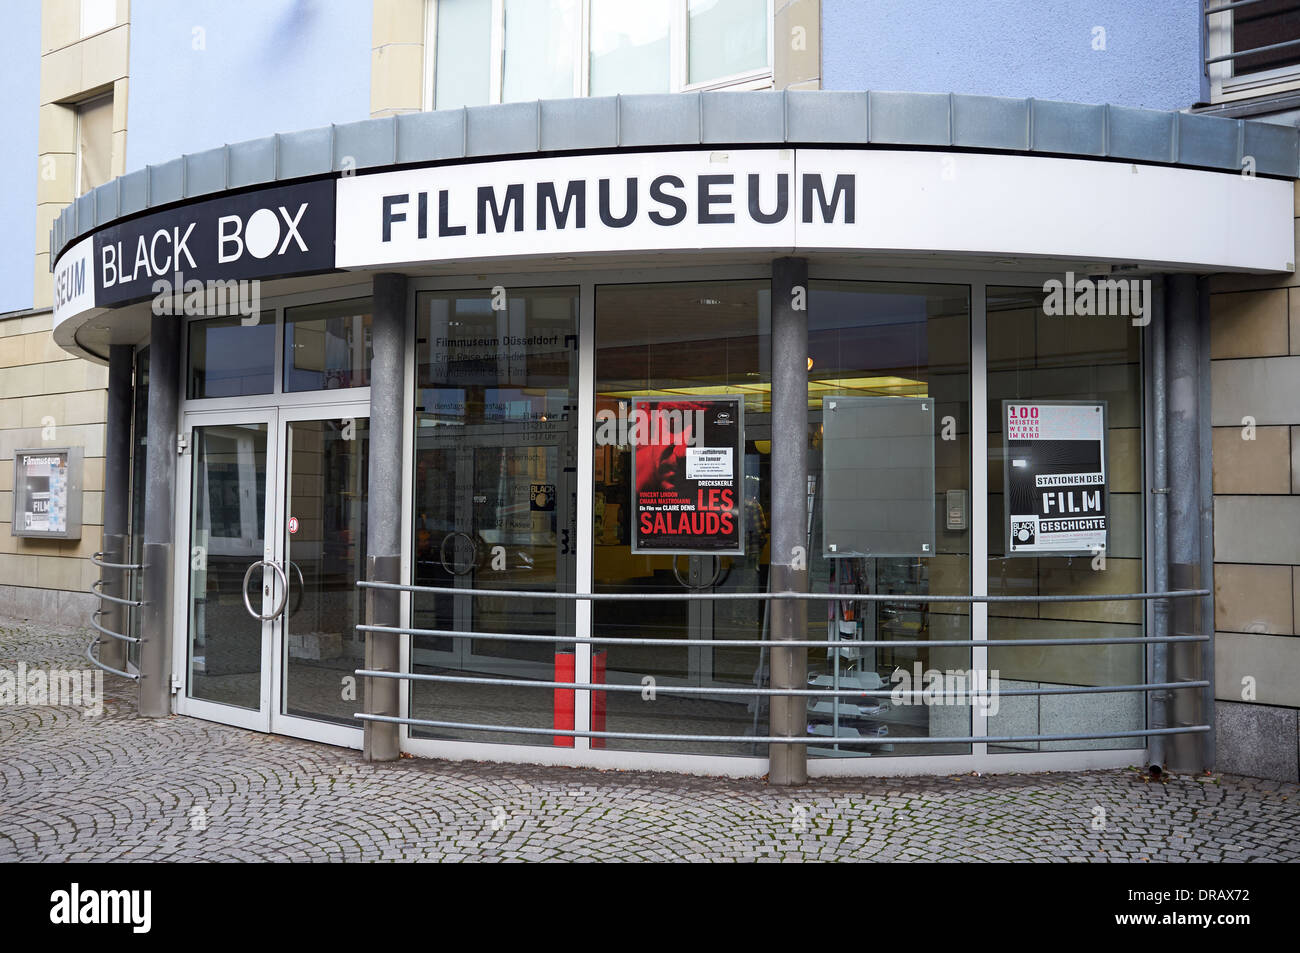 Scatola nera film museum, Dusseldorf, Germania Foto stock - Alamy